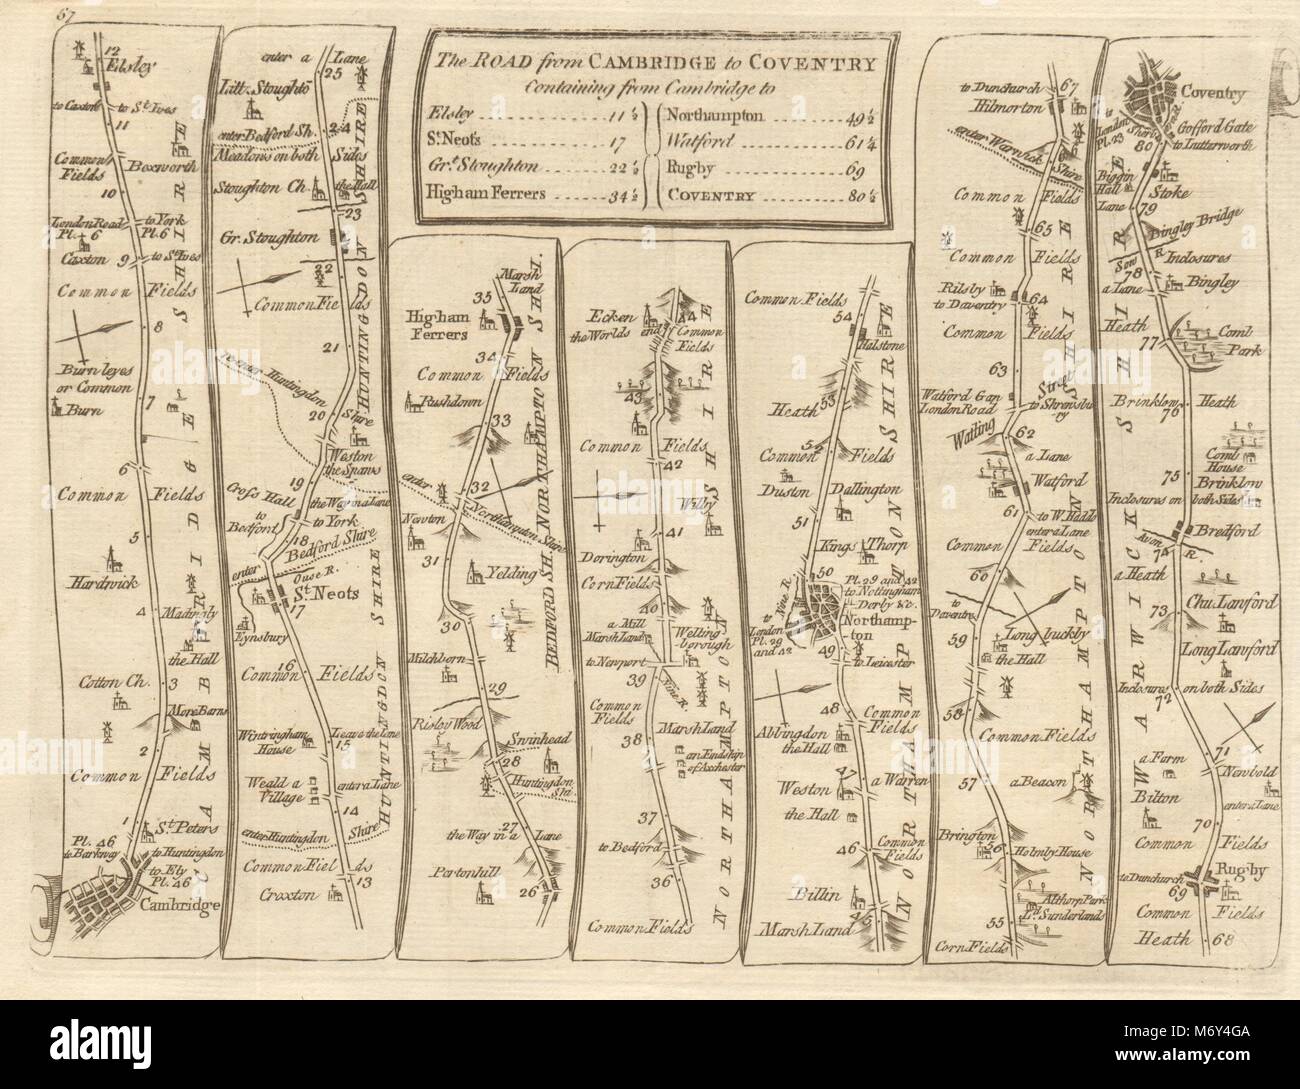 Cambridge Wellingborough Northampton Rugby Coventry. KITCHIN road map 1767 Stock Photo